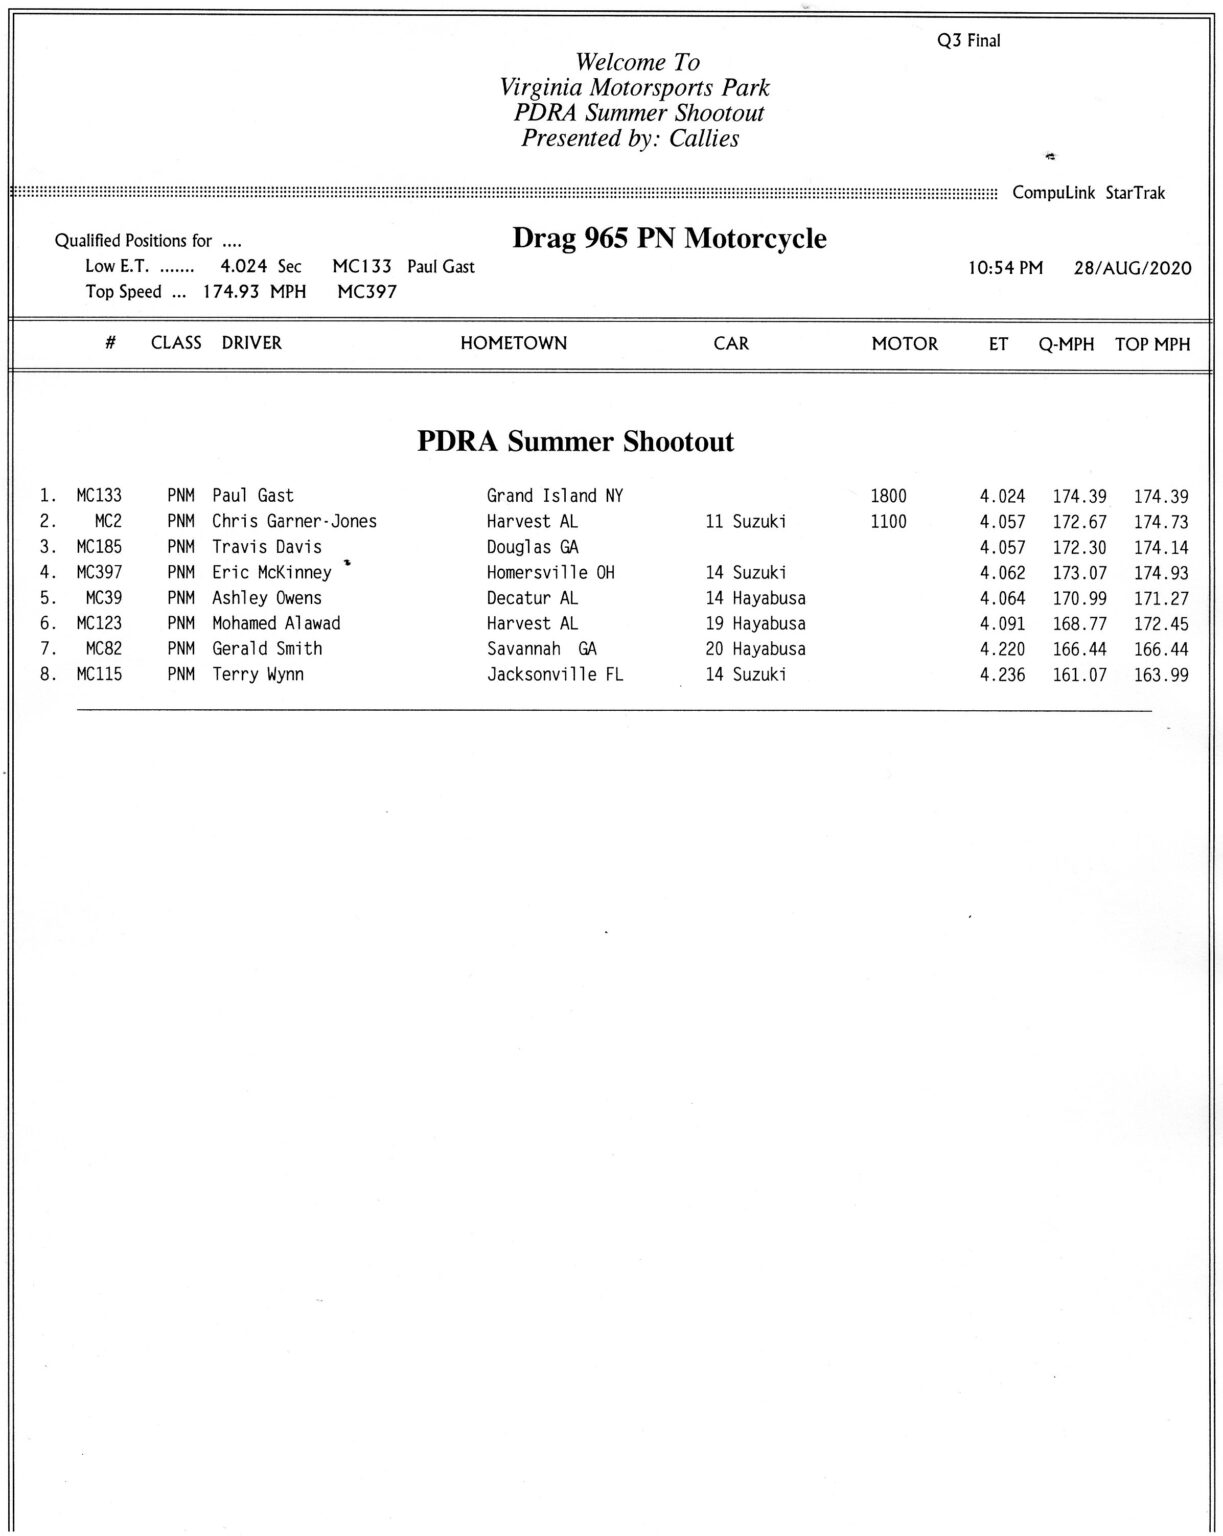 2020 VMP AUG PNM PDRA Race Results